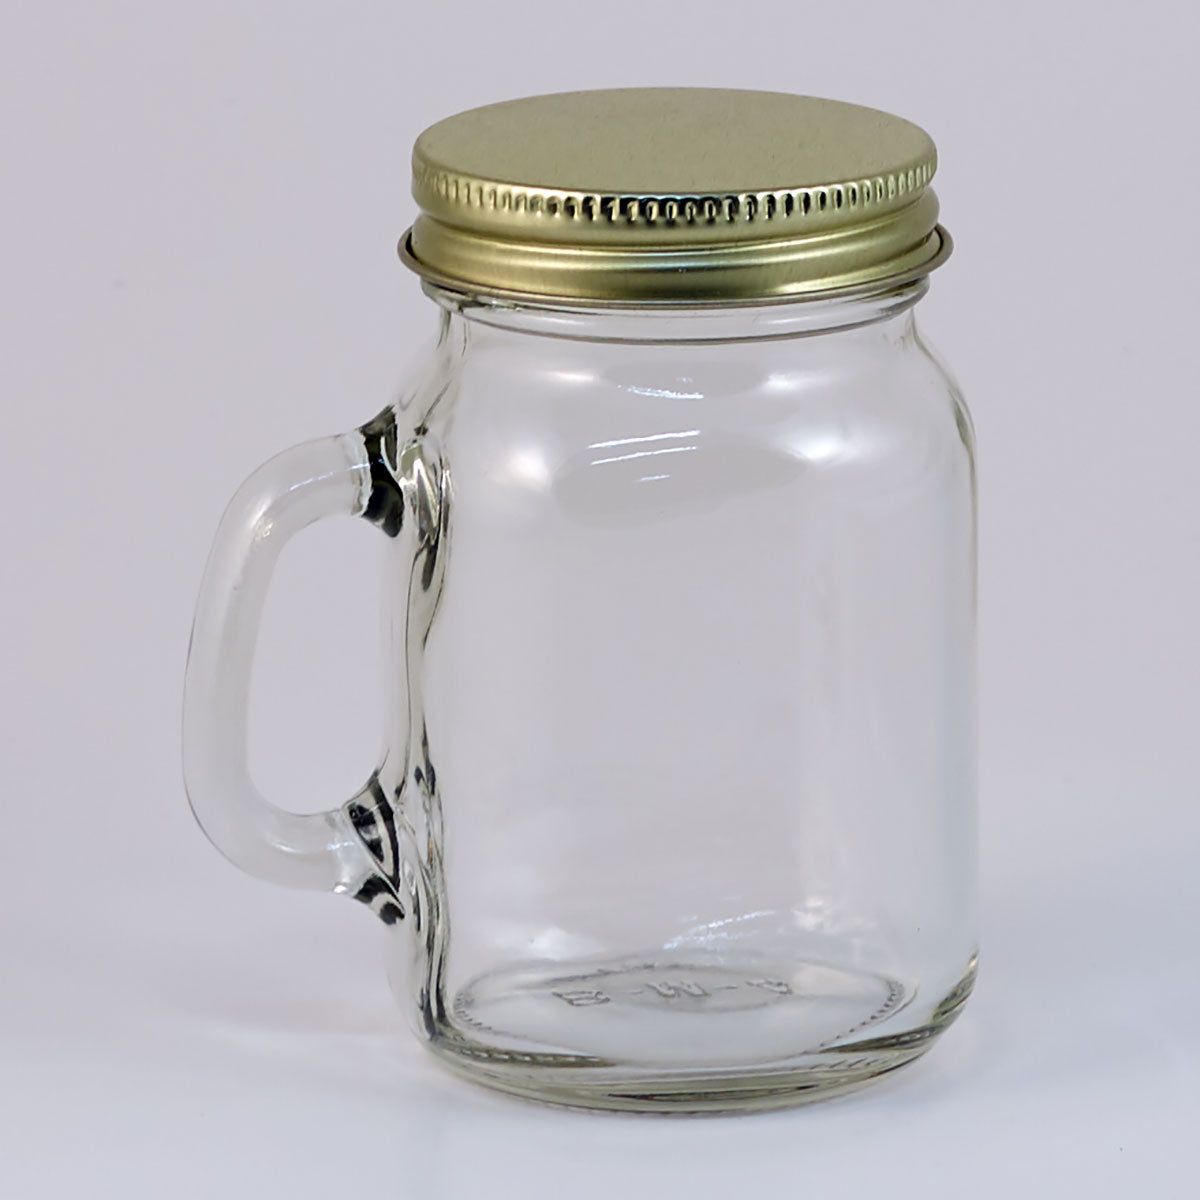 24-Pack 4 oz Mason Jars with Lids, Mini Glass Jars with Silver